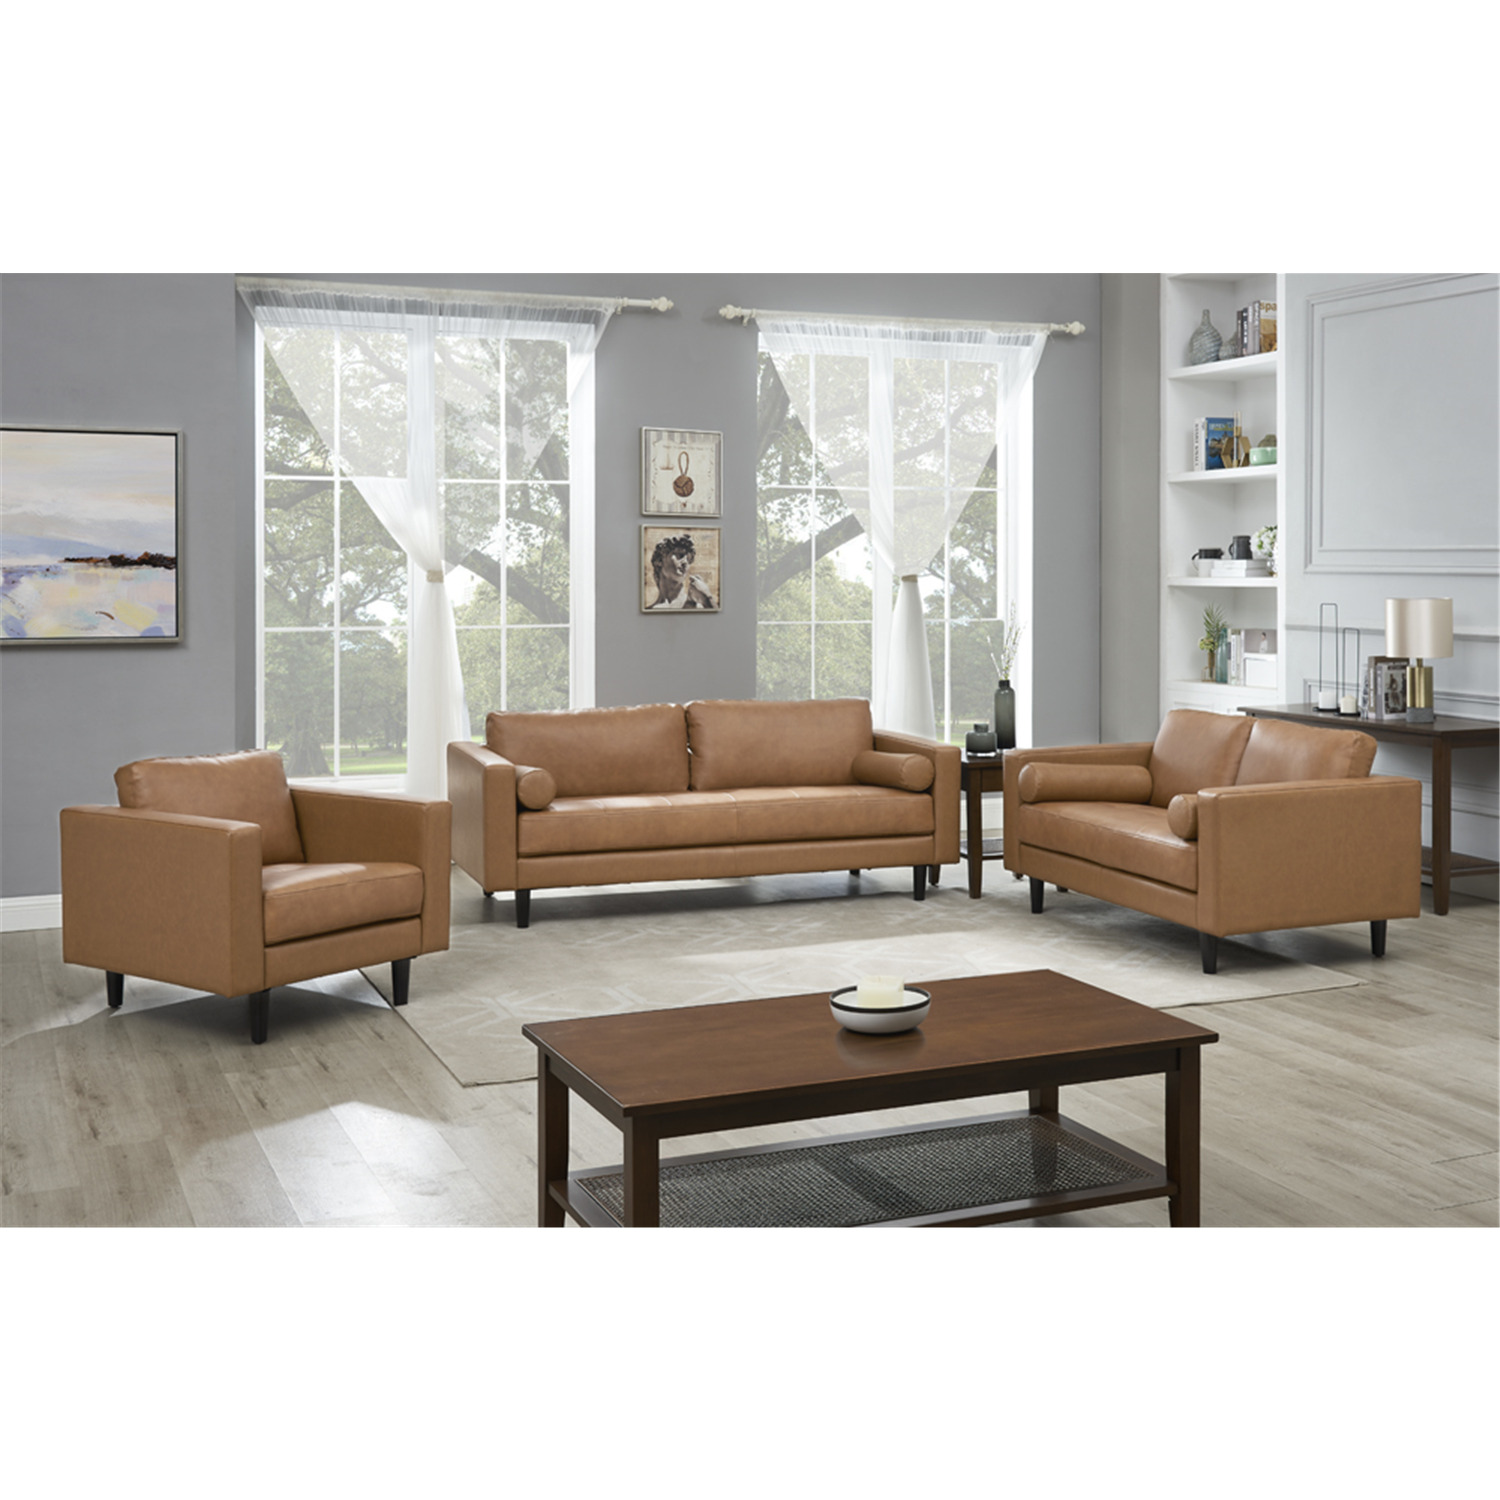 Naomi Home Marisa Genuine Leather Sofa, Real Leather Living Room Furniture Sets